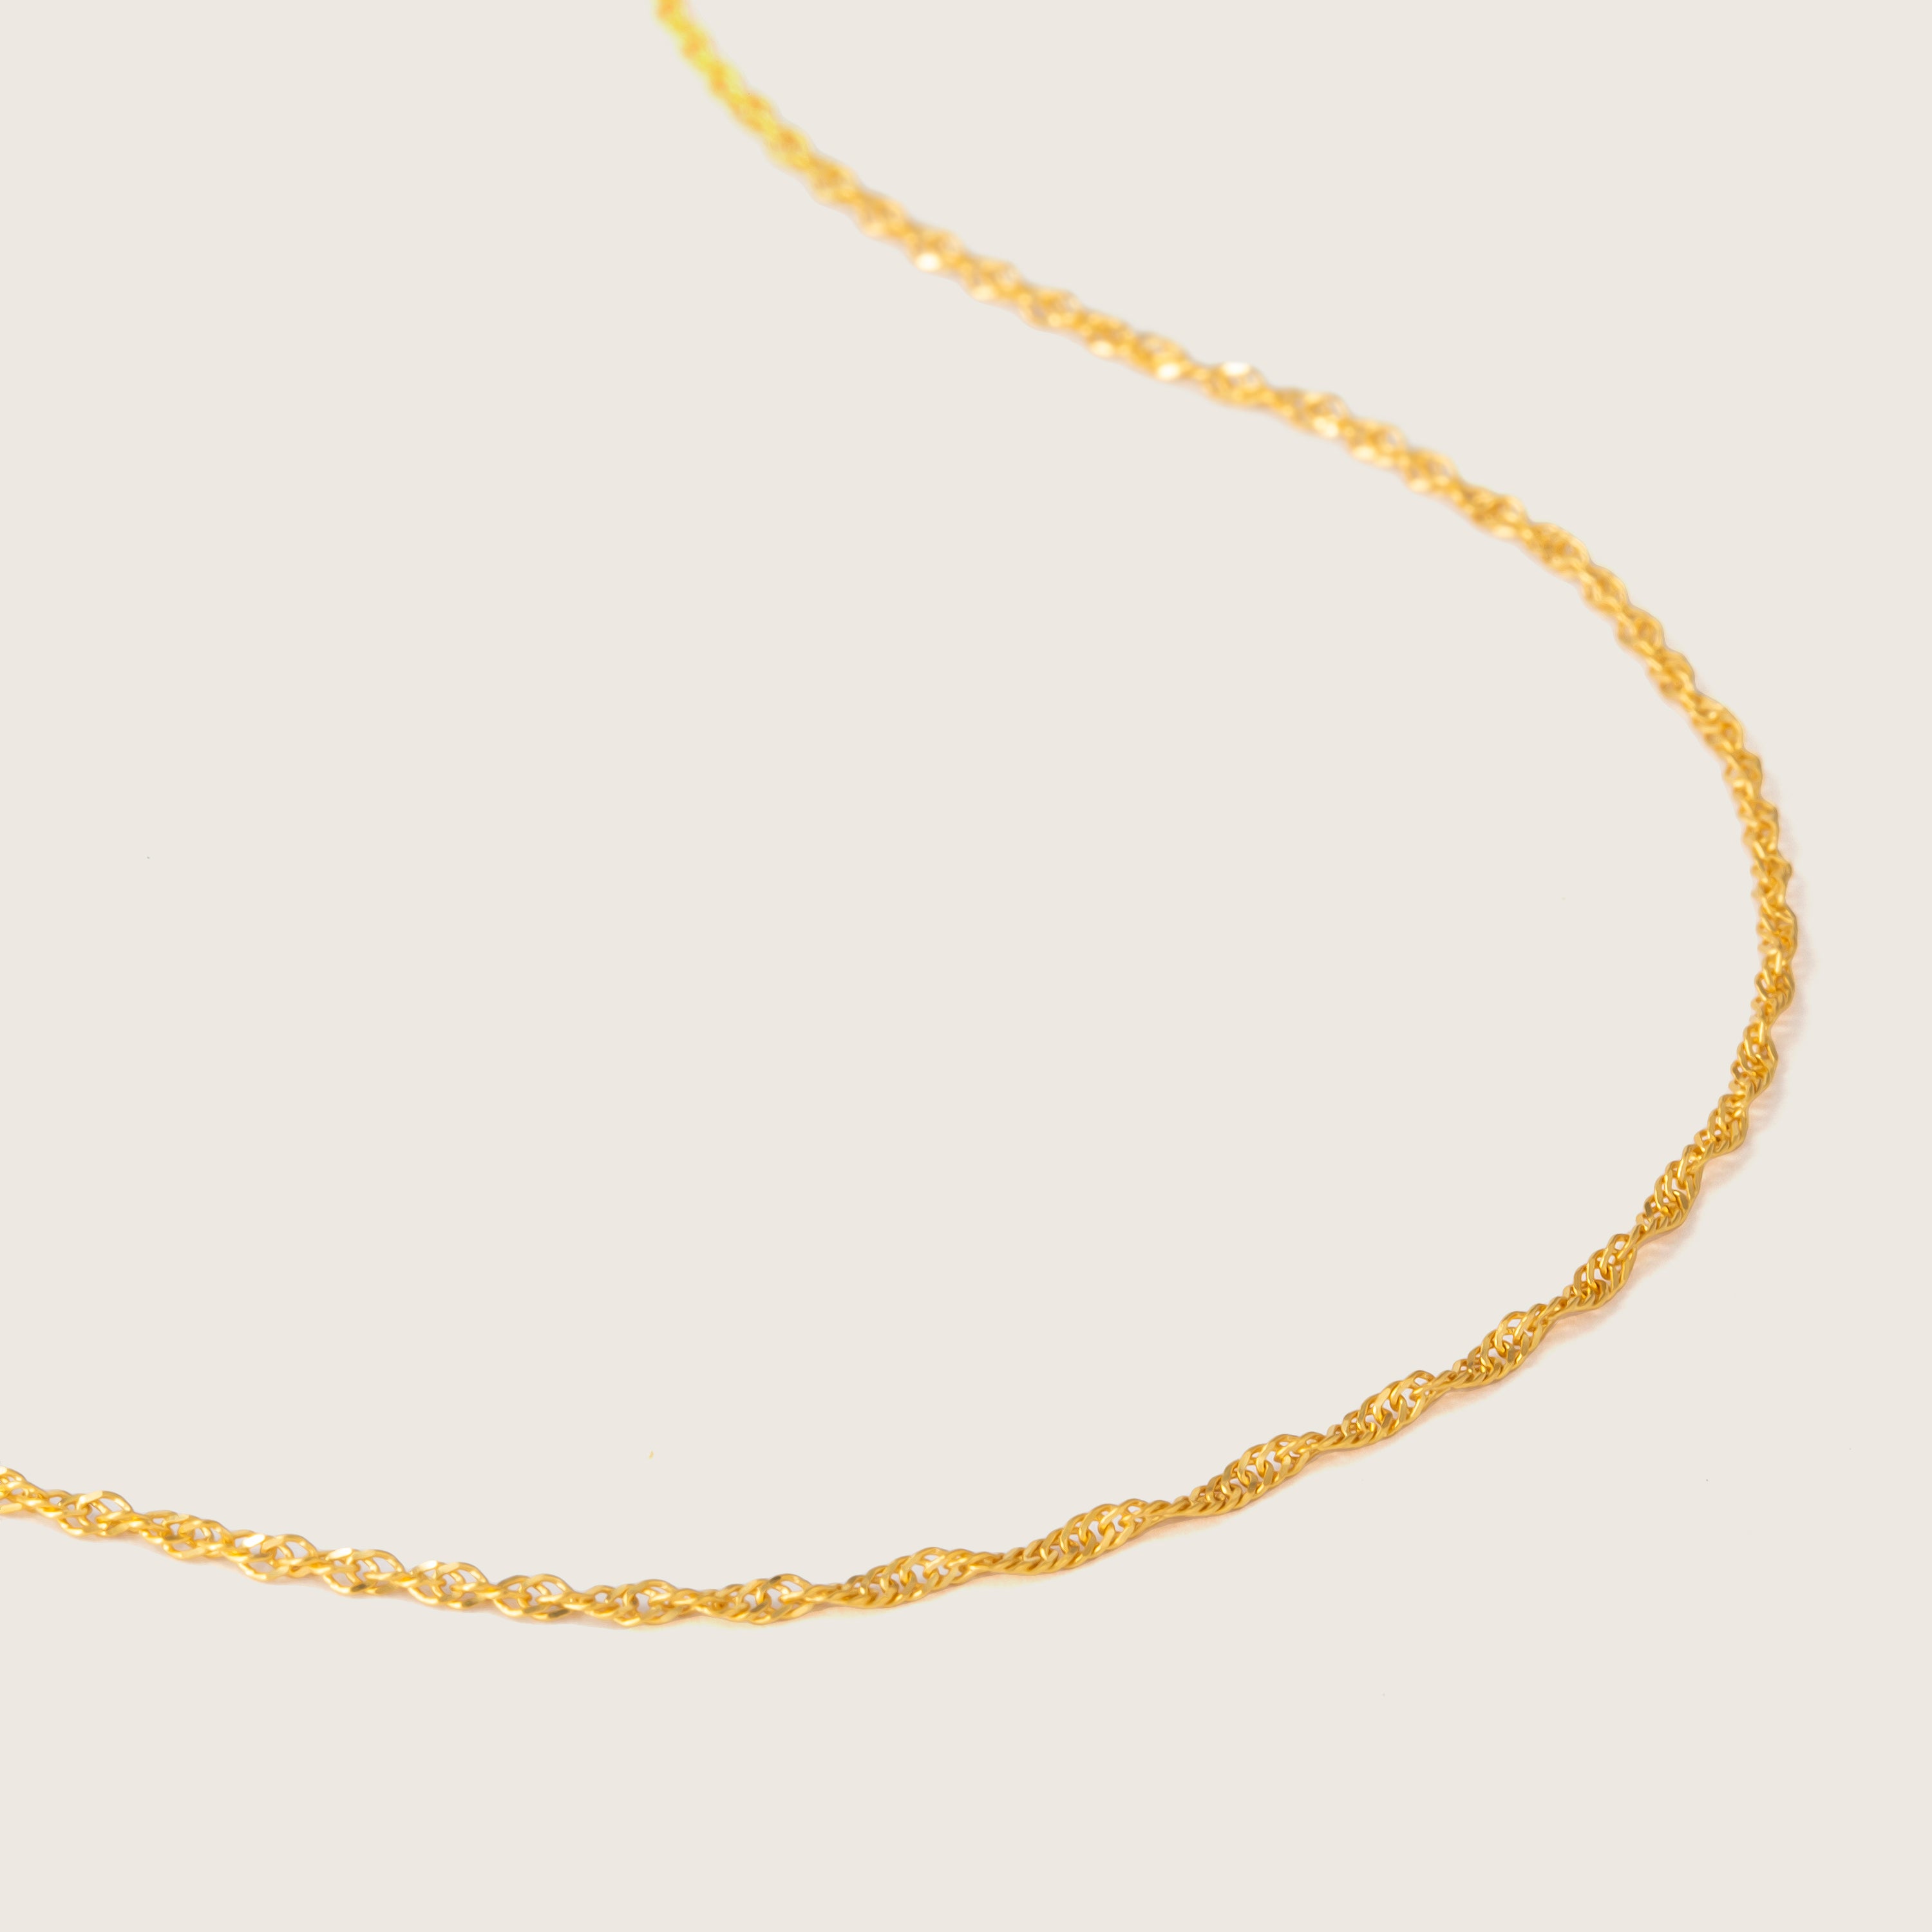 Gold Singapore Chain Choker Necklace